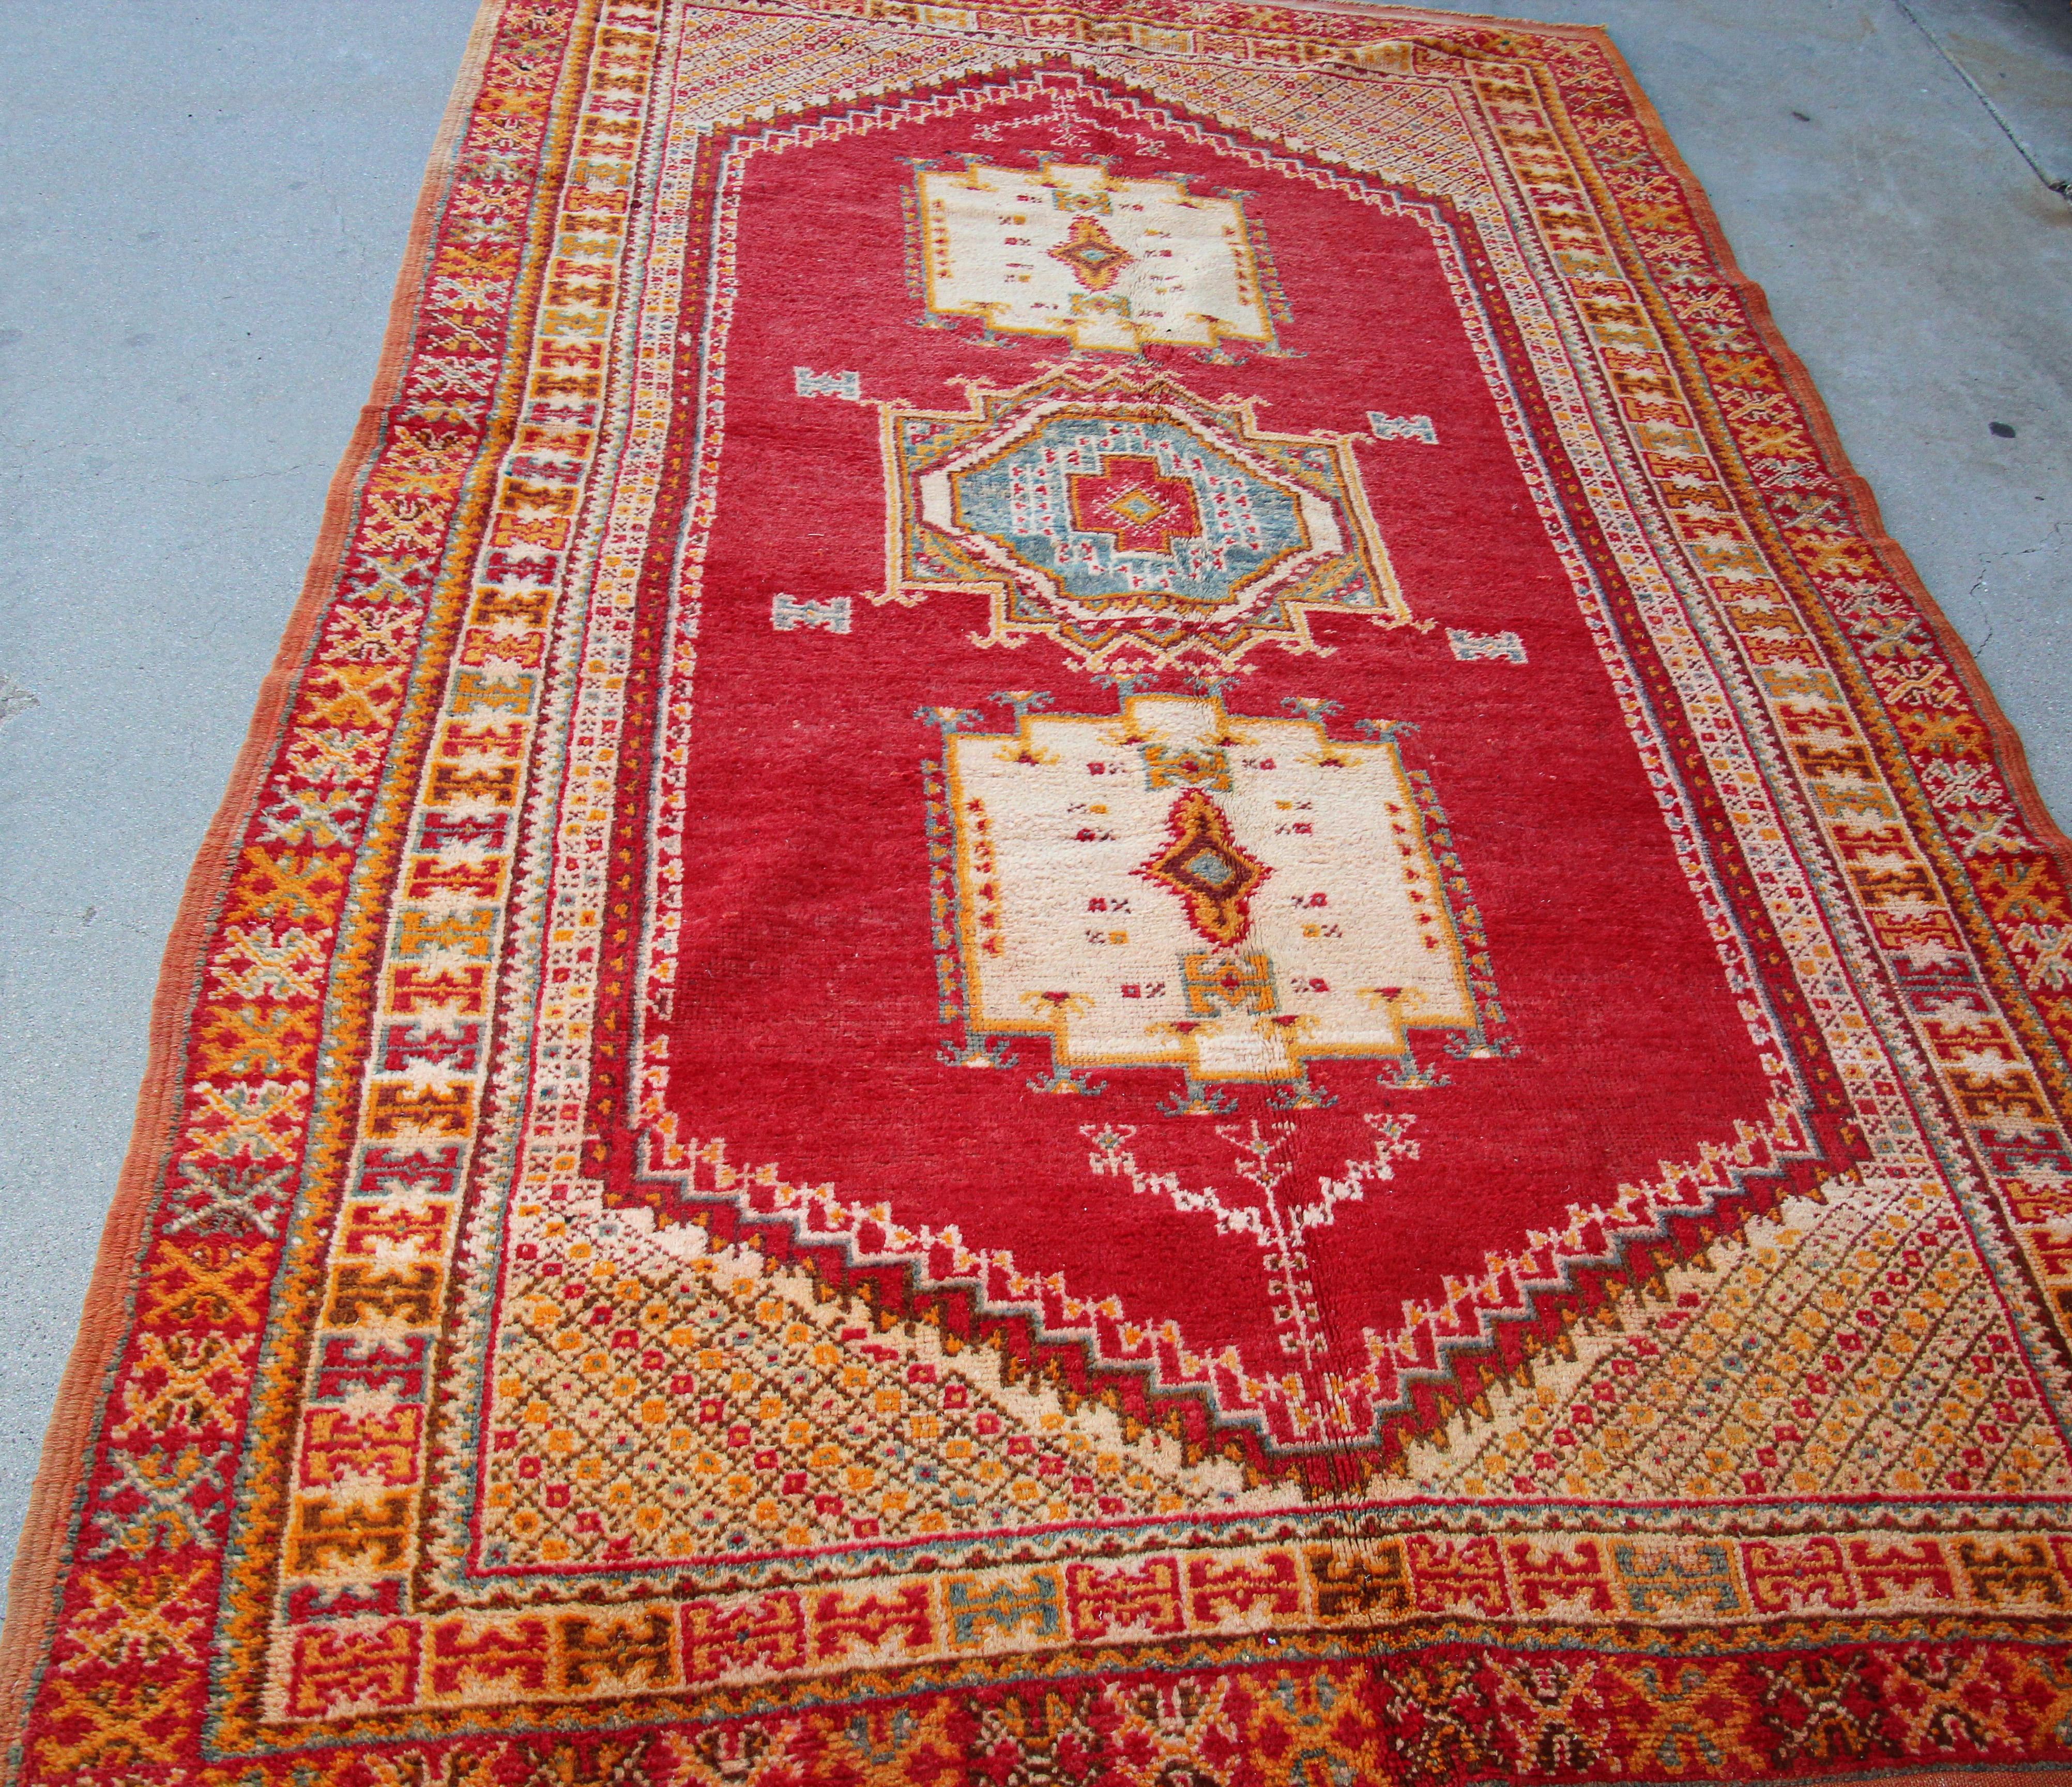 woven colorful rug